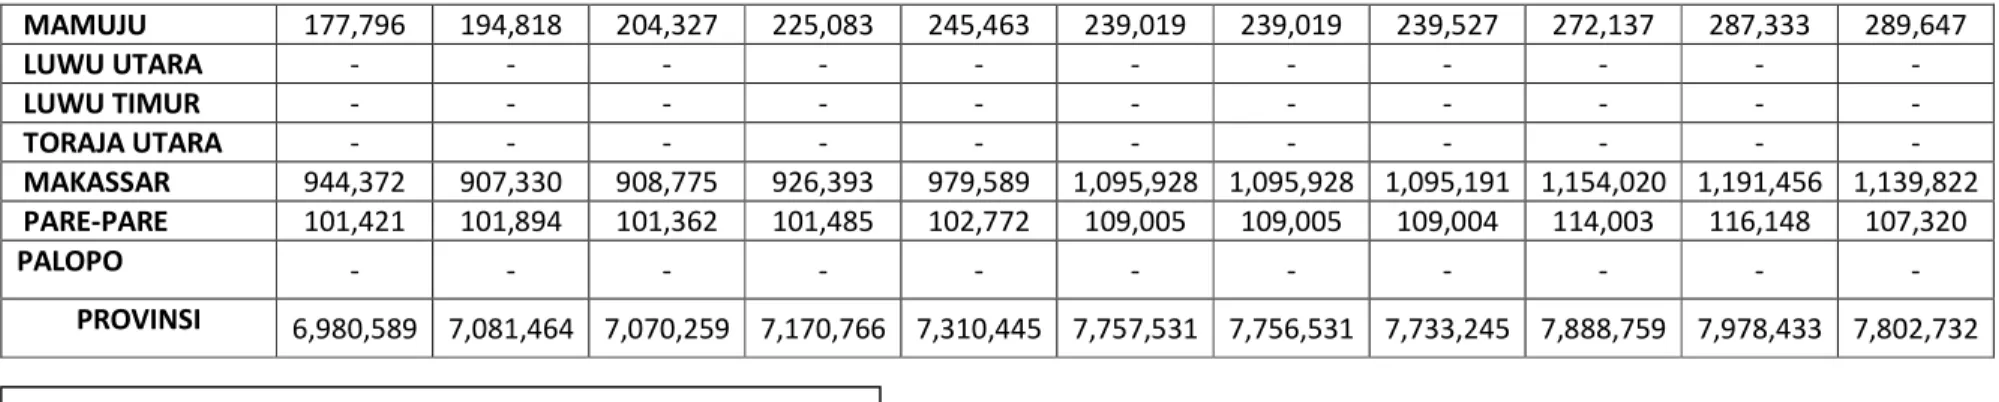 Tabel 4.10 Jumlah Penduduk Kabupaten/Kota Provinsi Sulawesi Selatan  Tahun 2001-2011  MAMUJU  177,796 194,818 204,327 225,083 245,463  239,019  239,019  239,527  272,137  287,333  289,647  LUWU UTARA  - - - - - - - - - - -  LUWU TIMUR  - - - - - - - - - - 